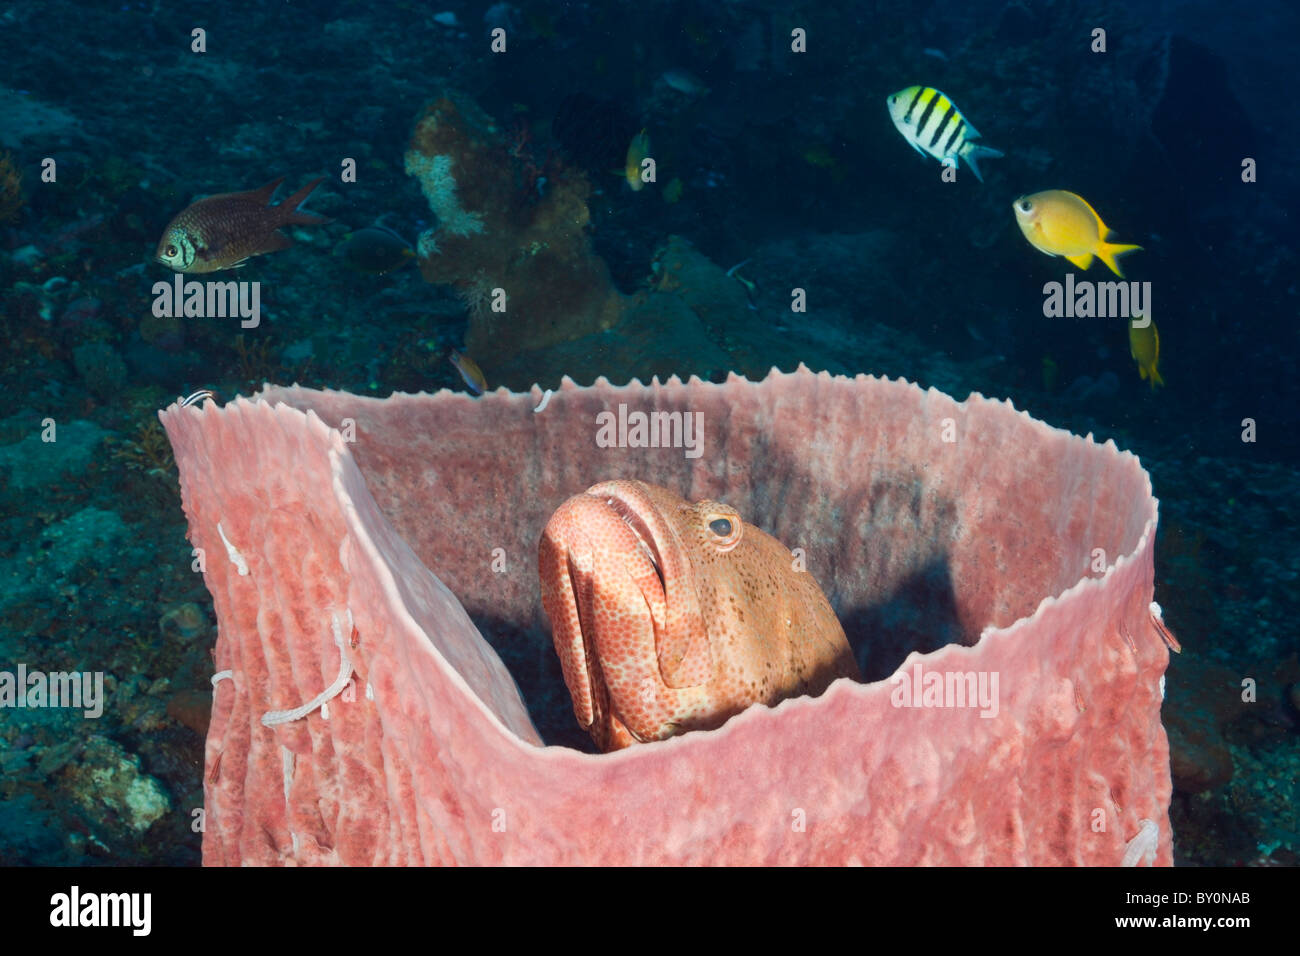 Grouper inside Barrel Sponge, Cephalopholis sp., Xestospongia testudinaria, Amed, Bali, Indonesia Stock Photo